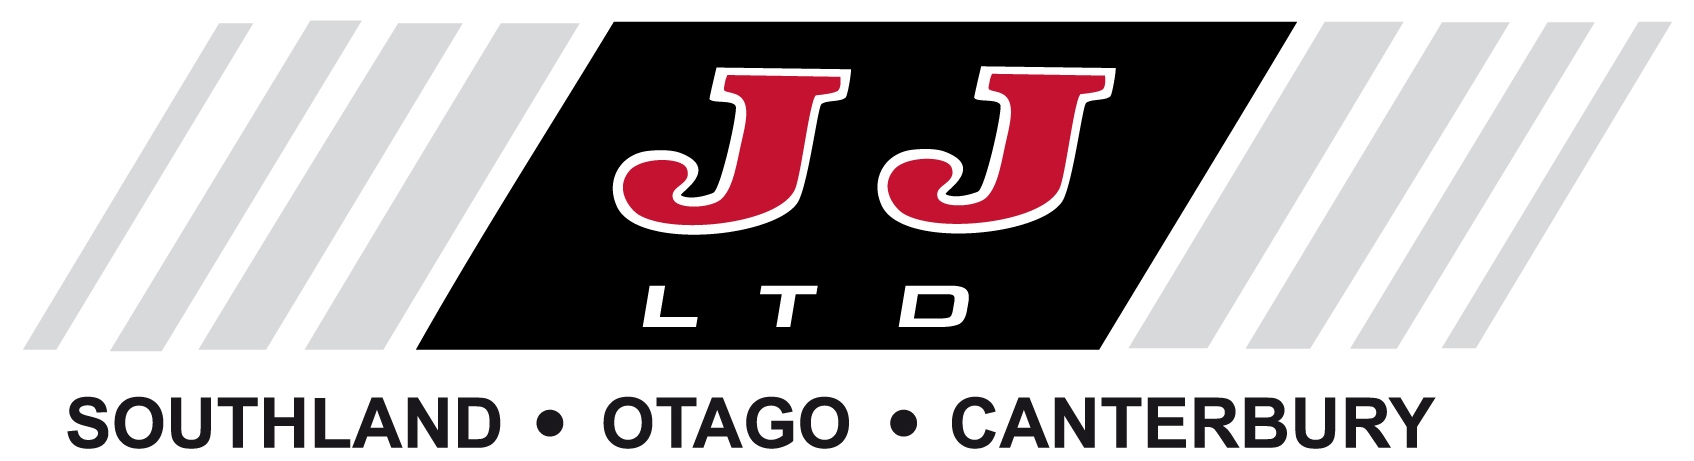 JJs Logo - Regions